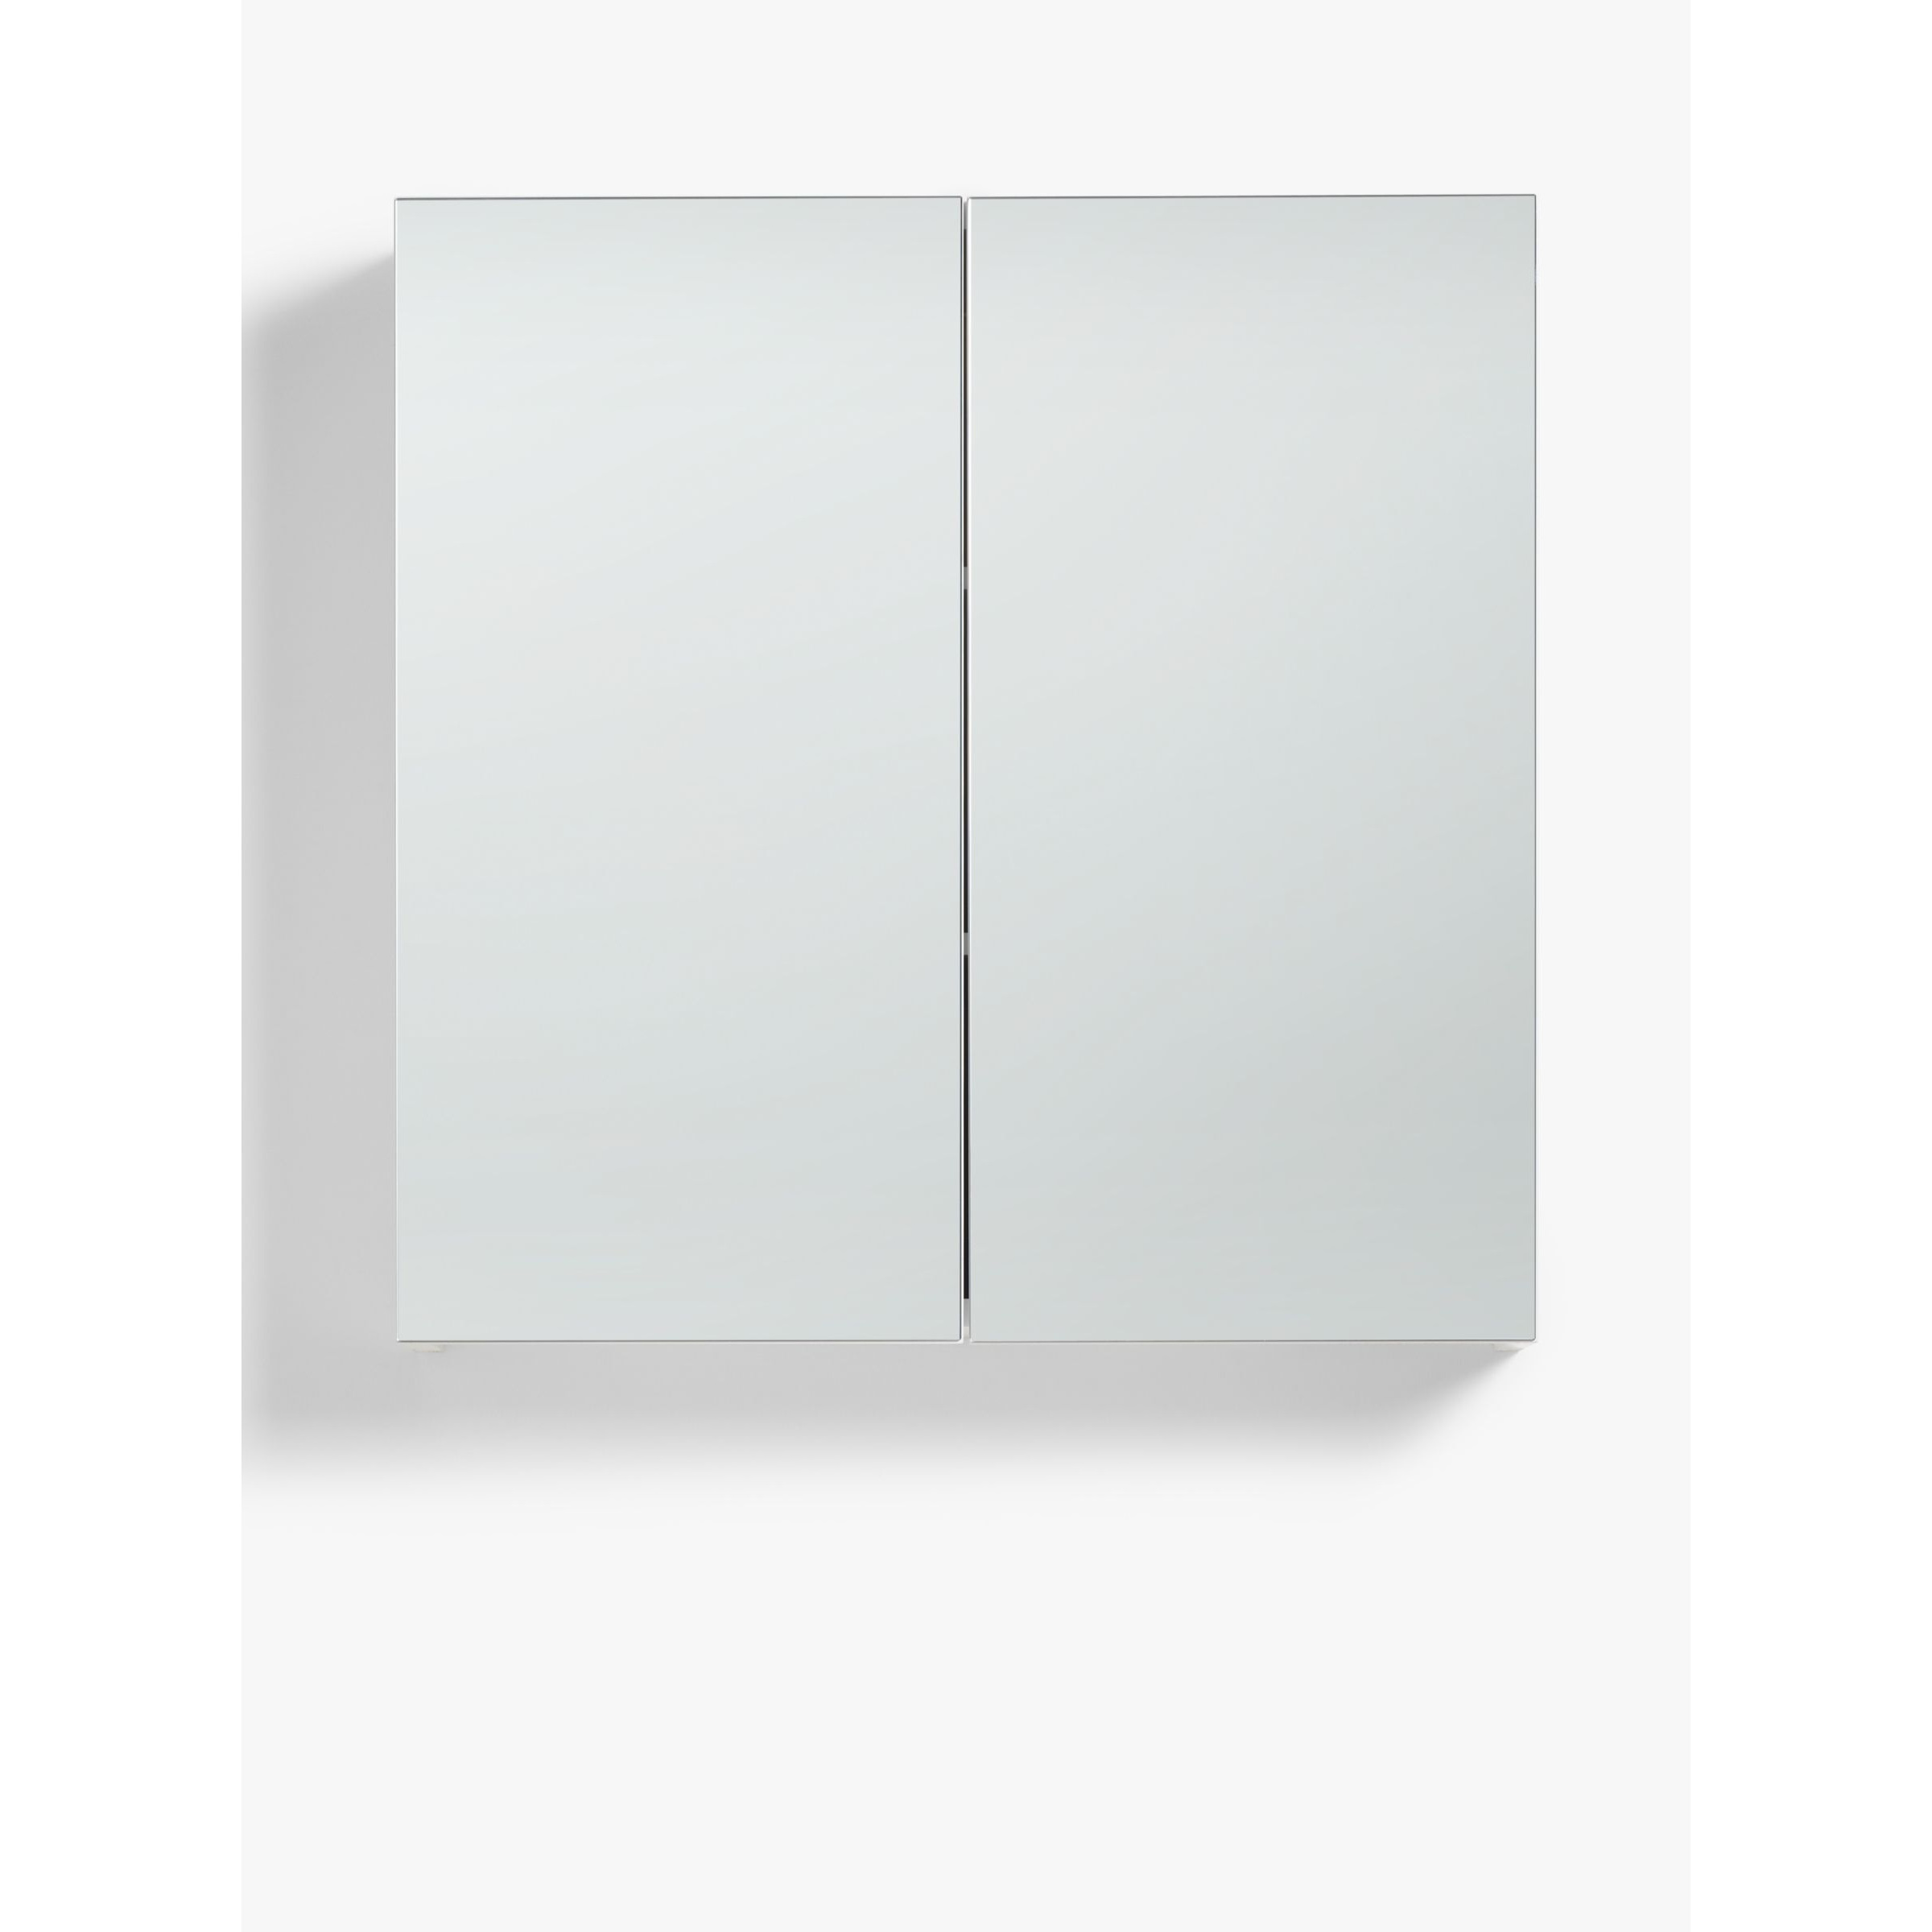 John Lewis White Gloss Double Mirrored Bathroom Cabinet - image 1